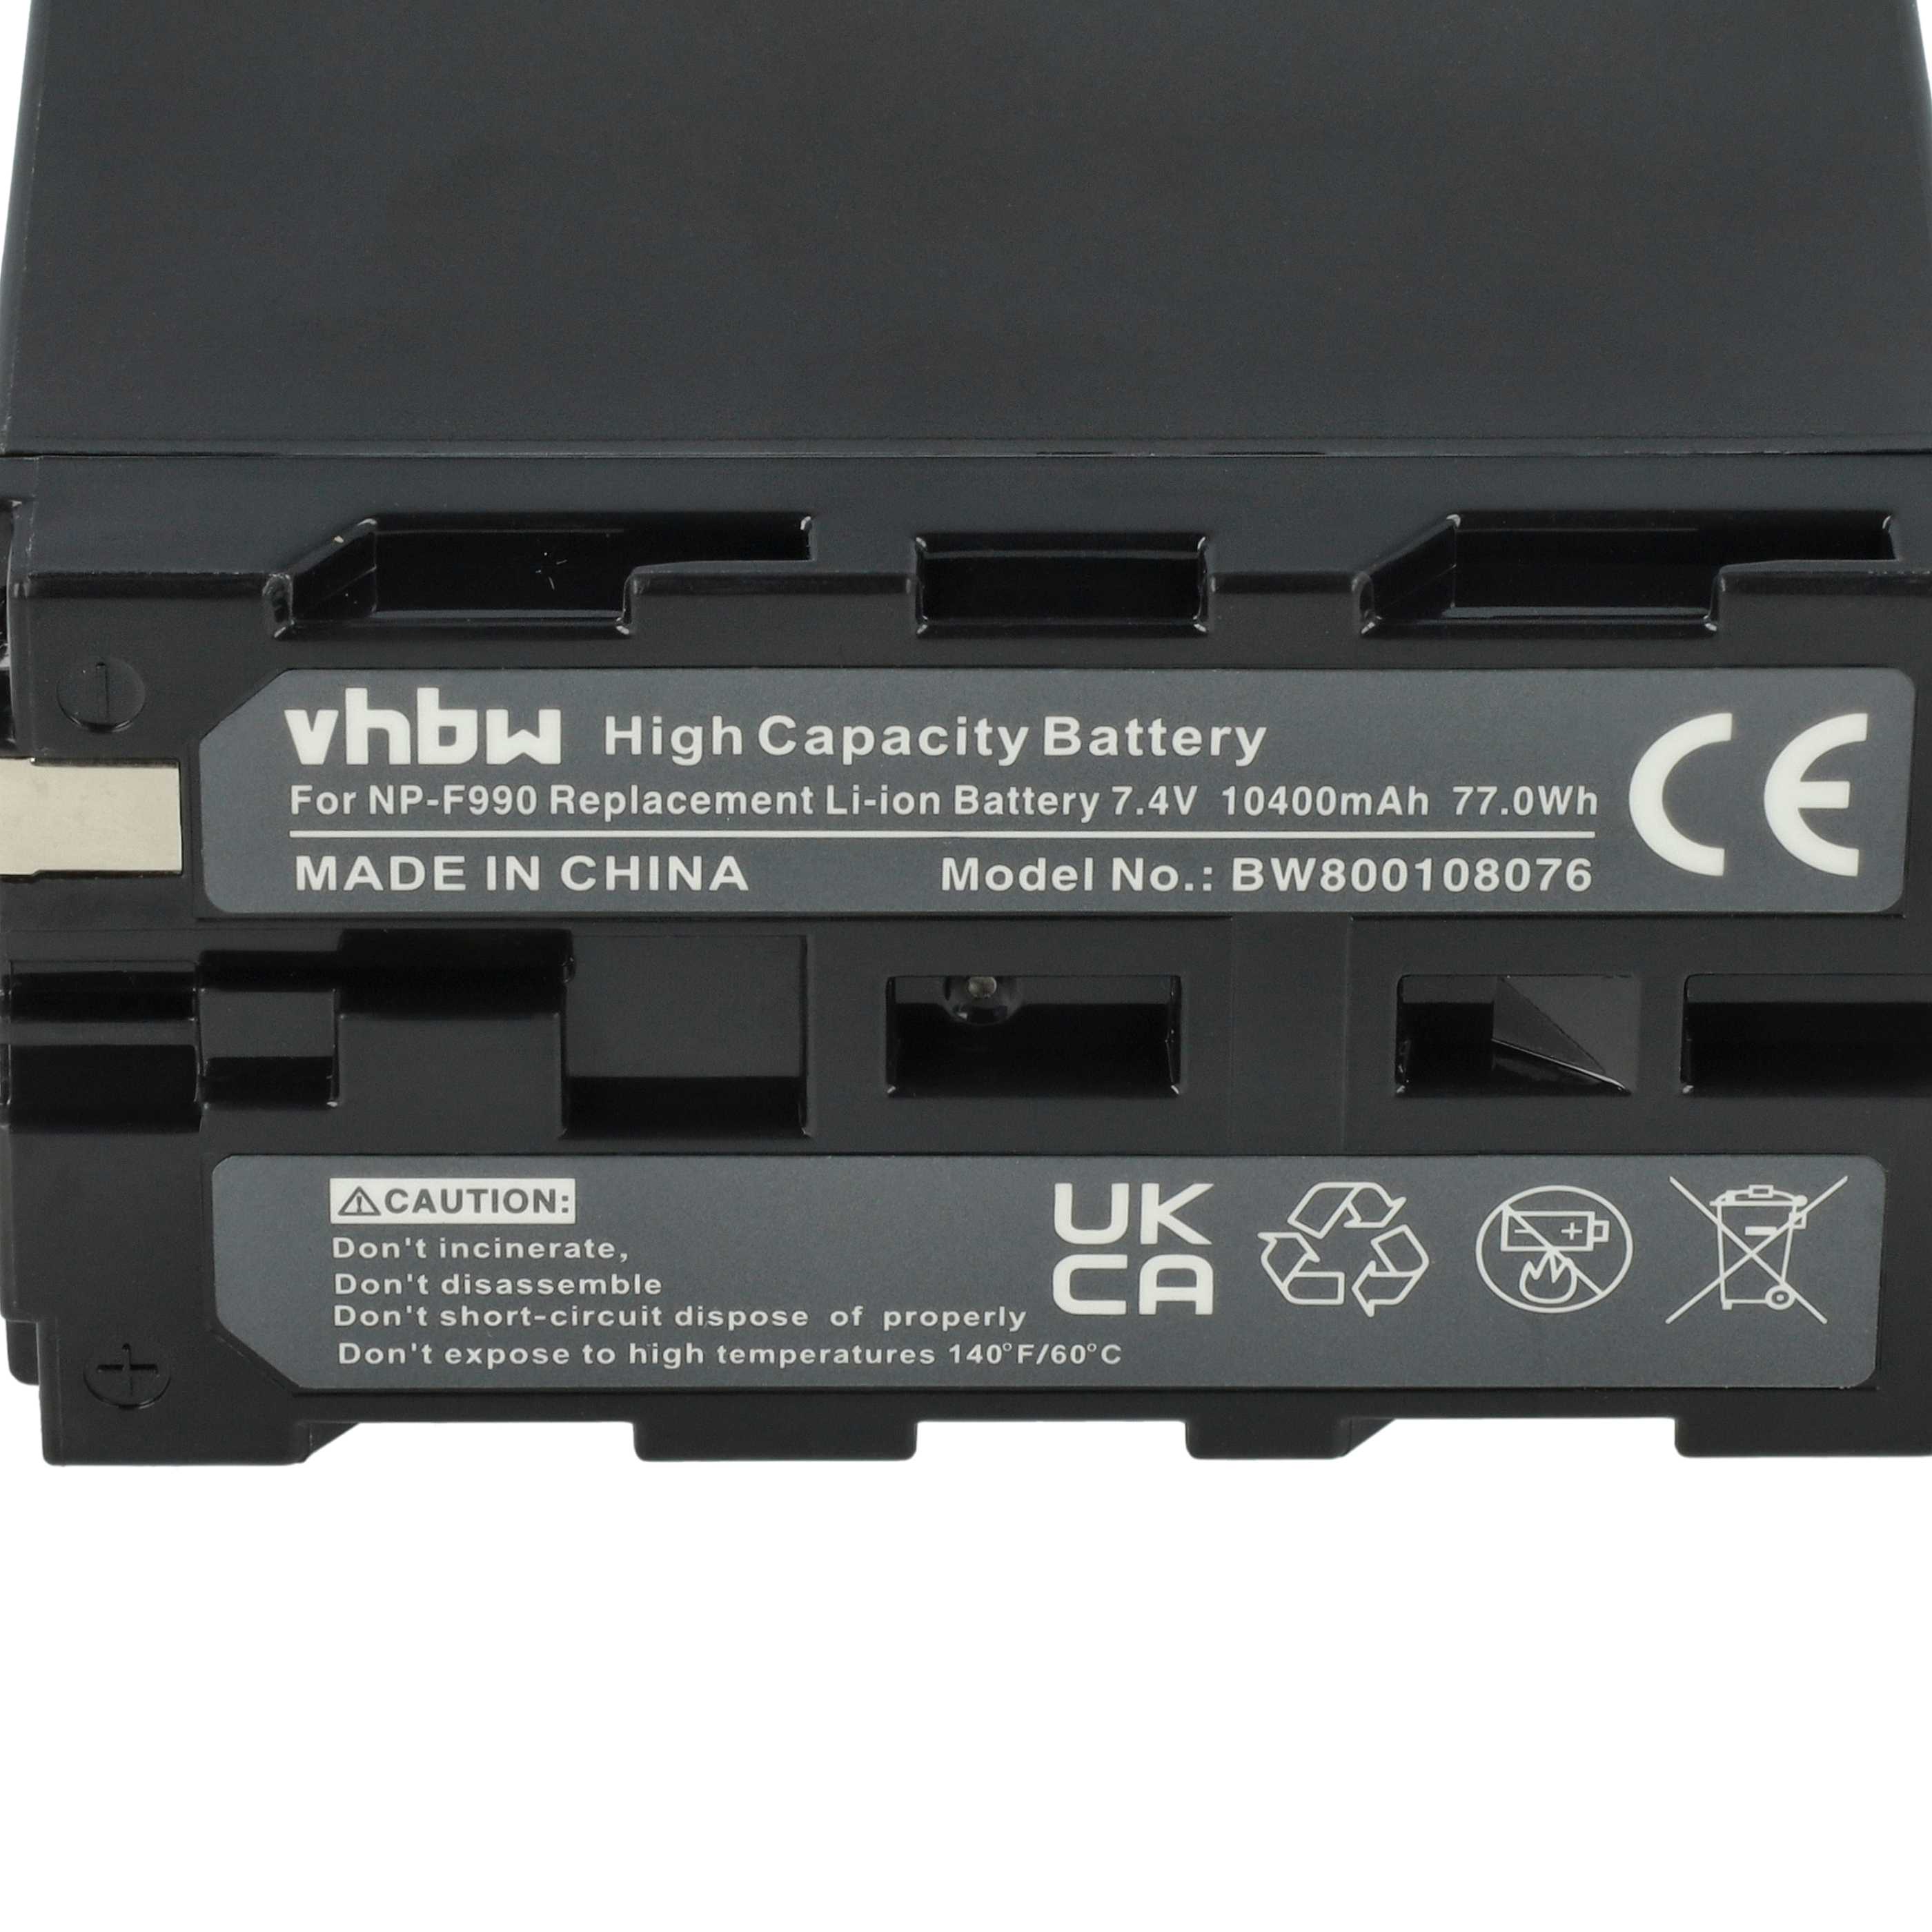 Batterie remplace Sony NP-F930, NP-F990, NP-F970, NP-F960, NP-F950 pour caméscope - 10400mAh 7,4V Li-ion